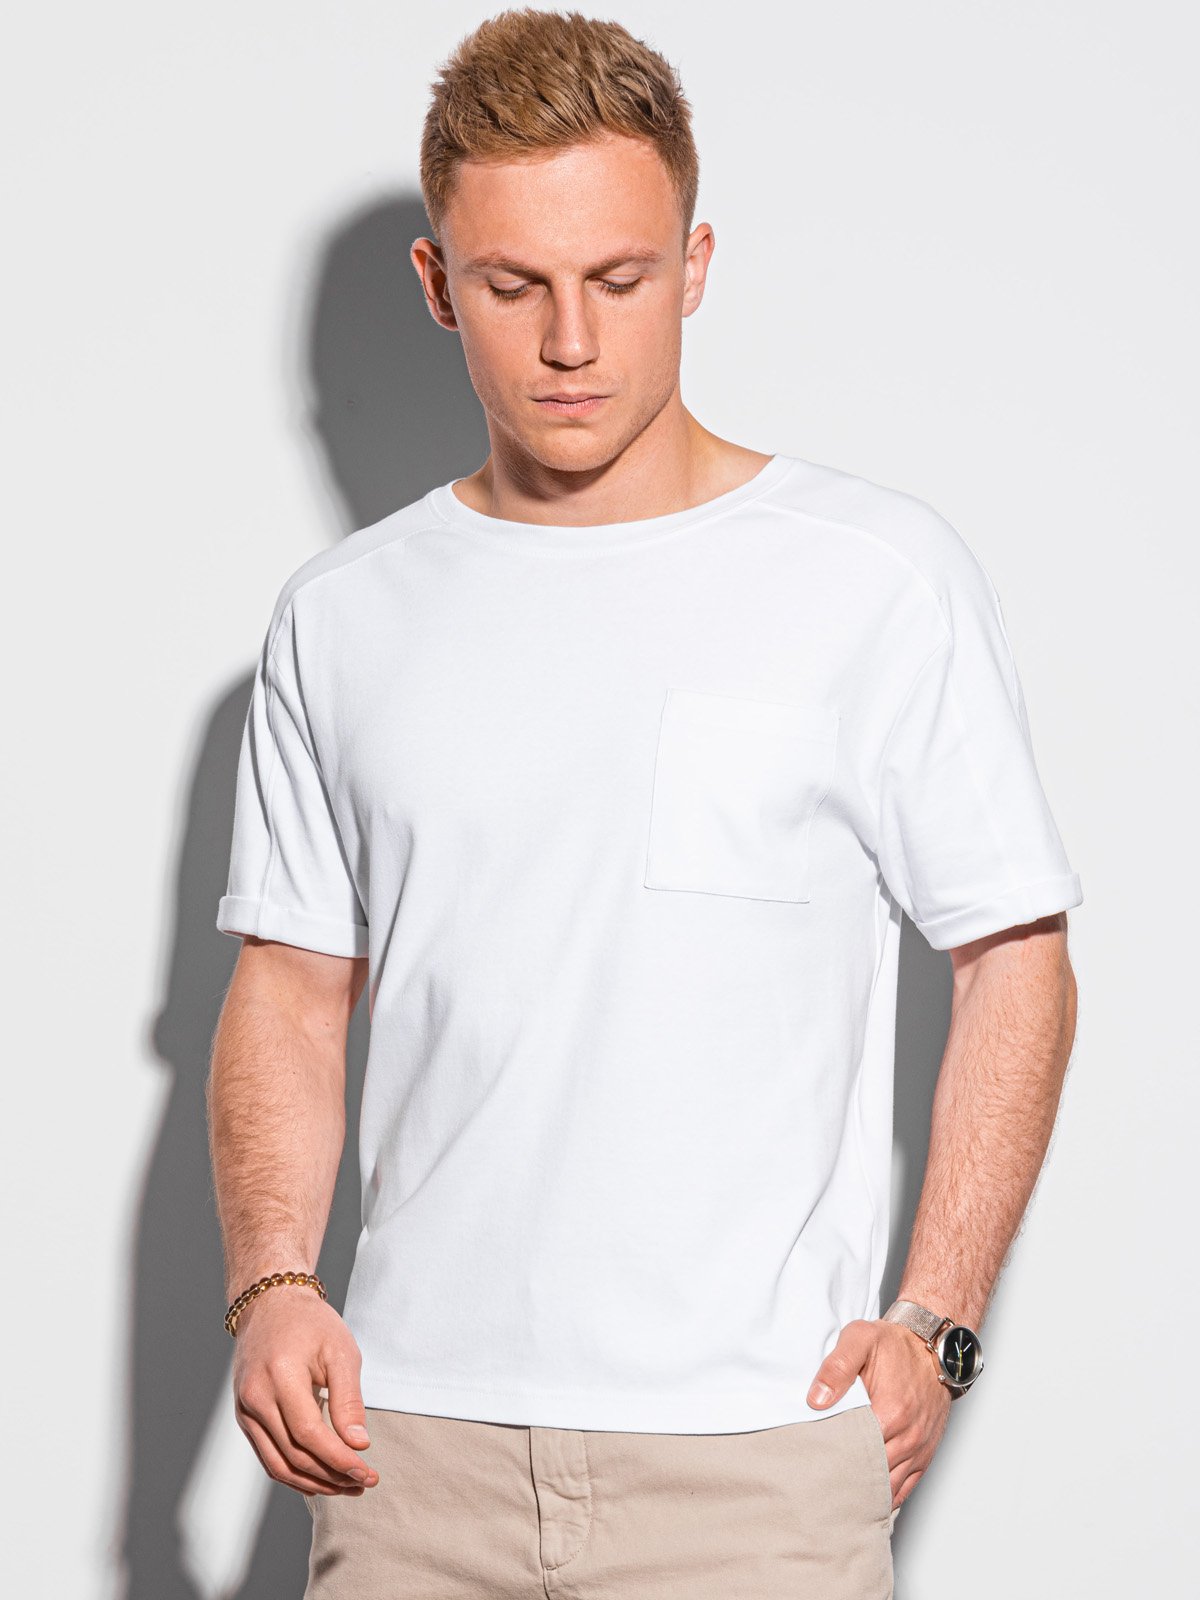 Men's plain t-shirt - white S1386 | MODONE wholesale - Clothing For Men